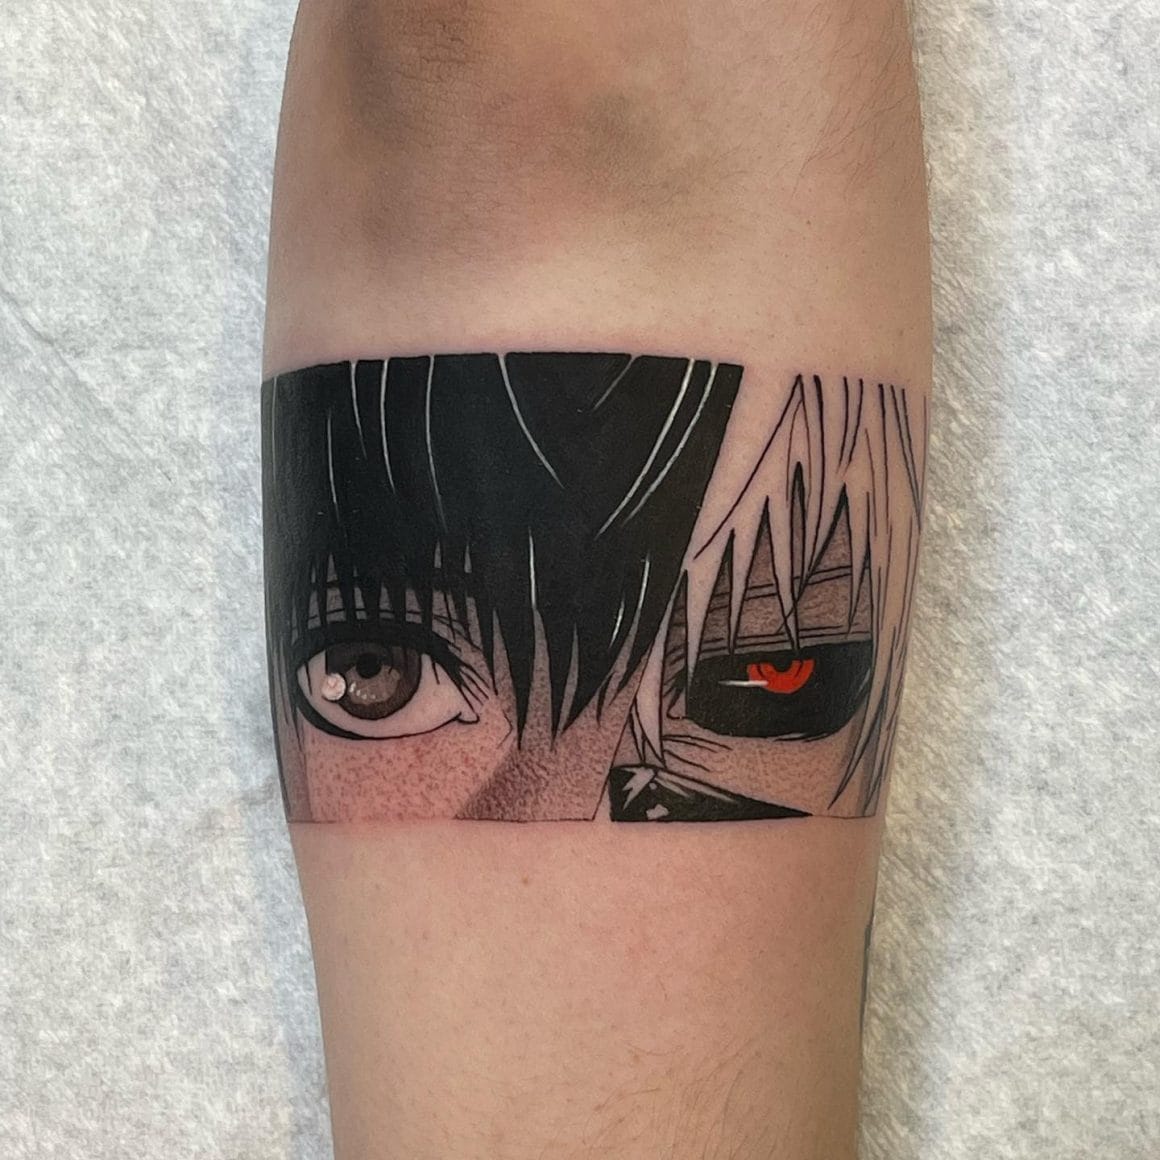 Tattoo uploaded by Morgan Bainbridge  Tokyo ghoul  Tattoodo